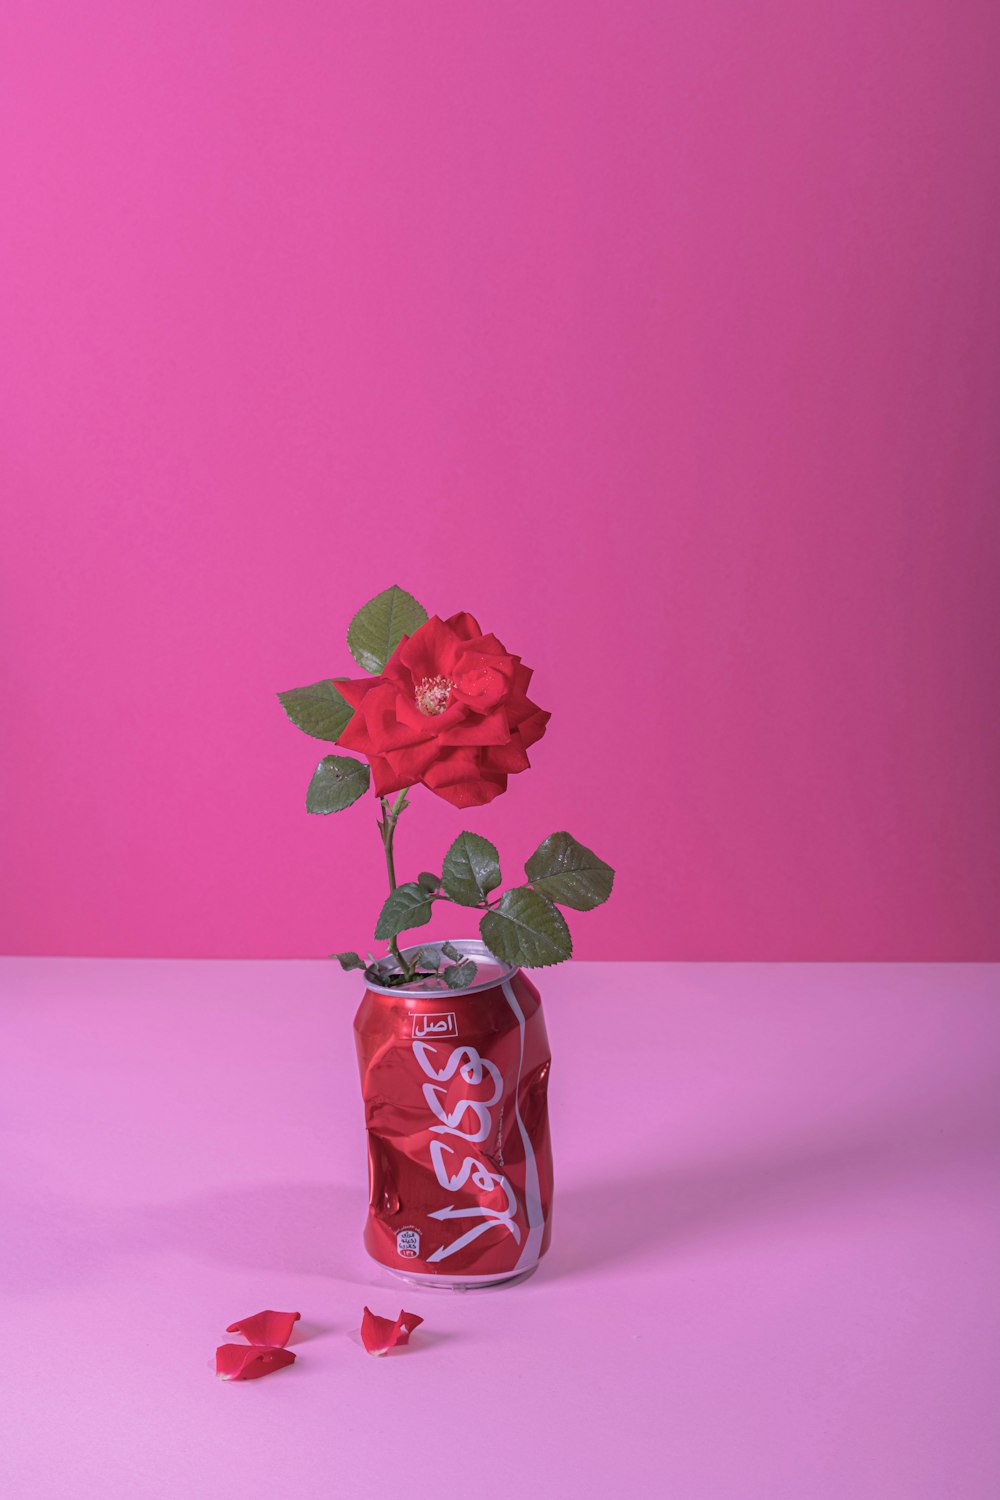 a red rose in a vase